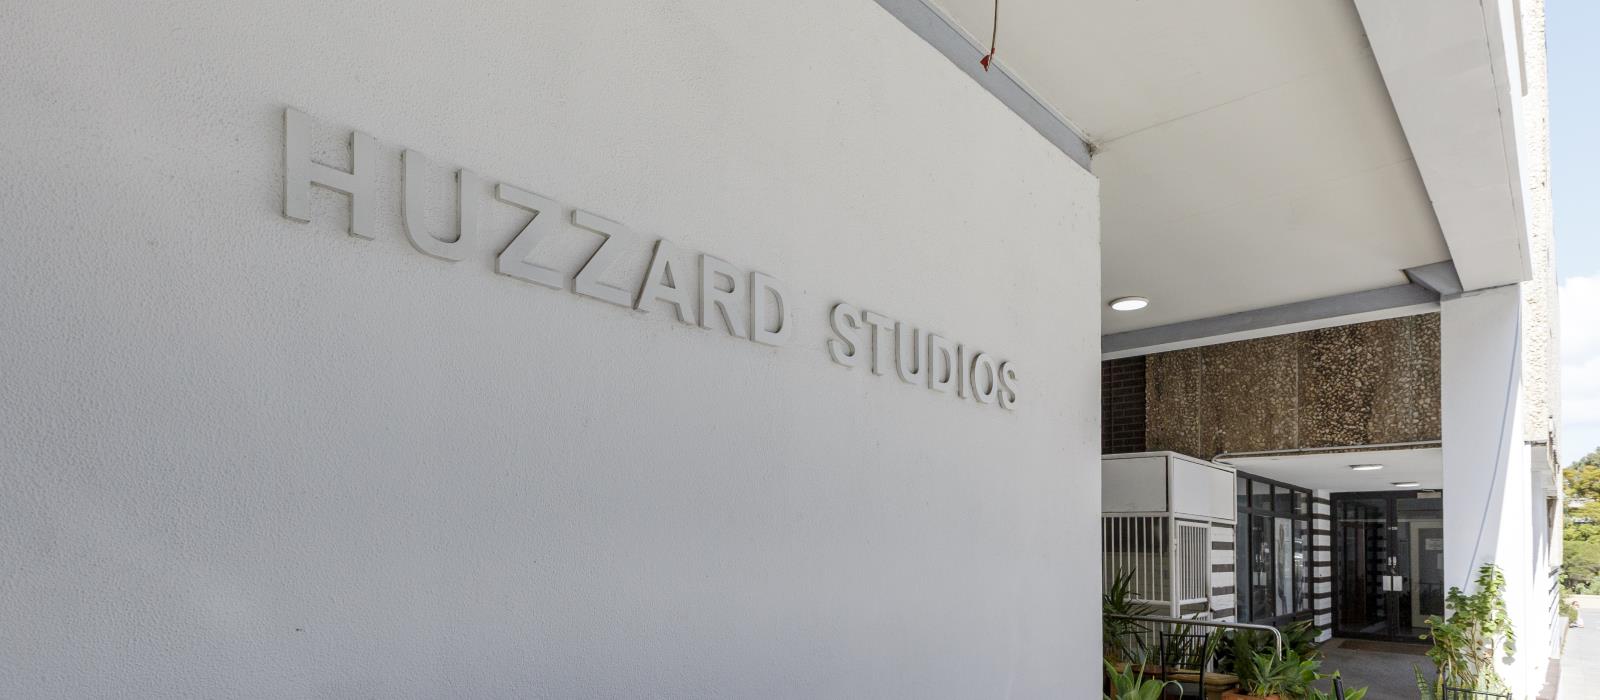 Huzzard Studios